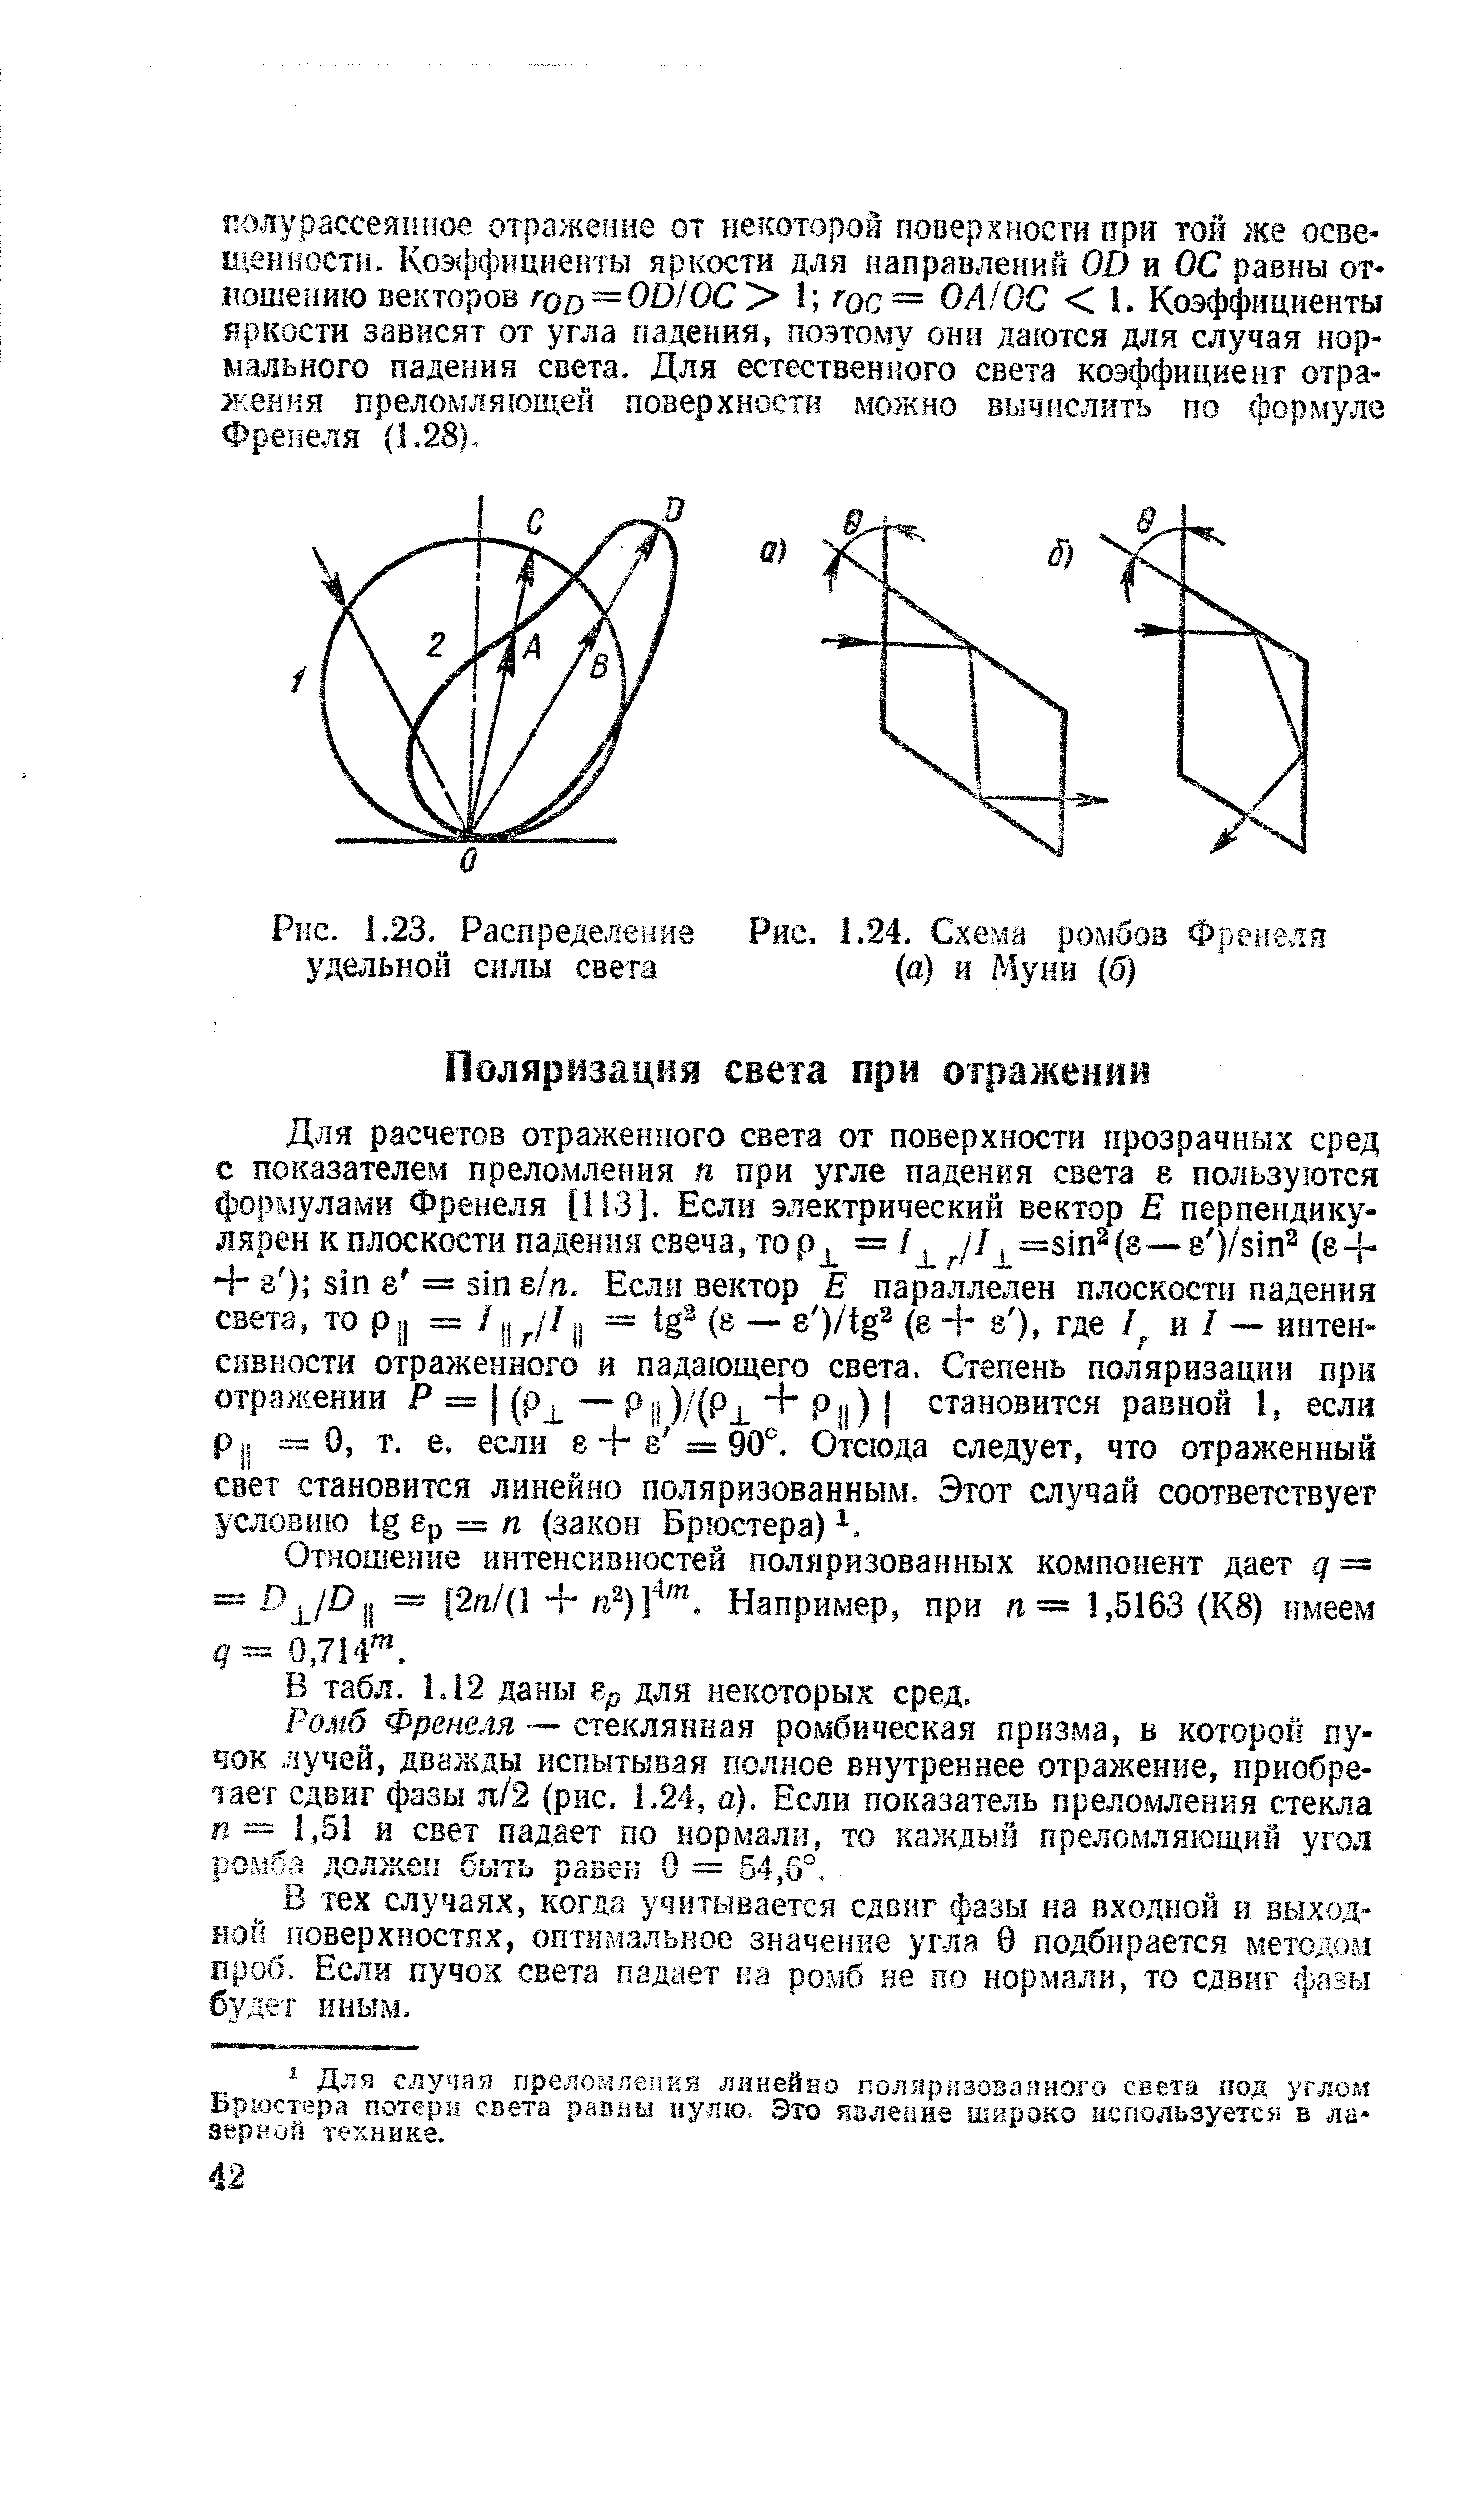 Рис. 1.24. Схема ромбов Френеля (а) и Муни (б)
